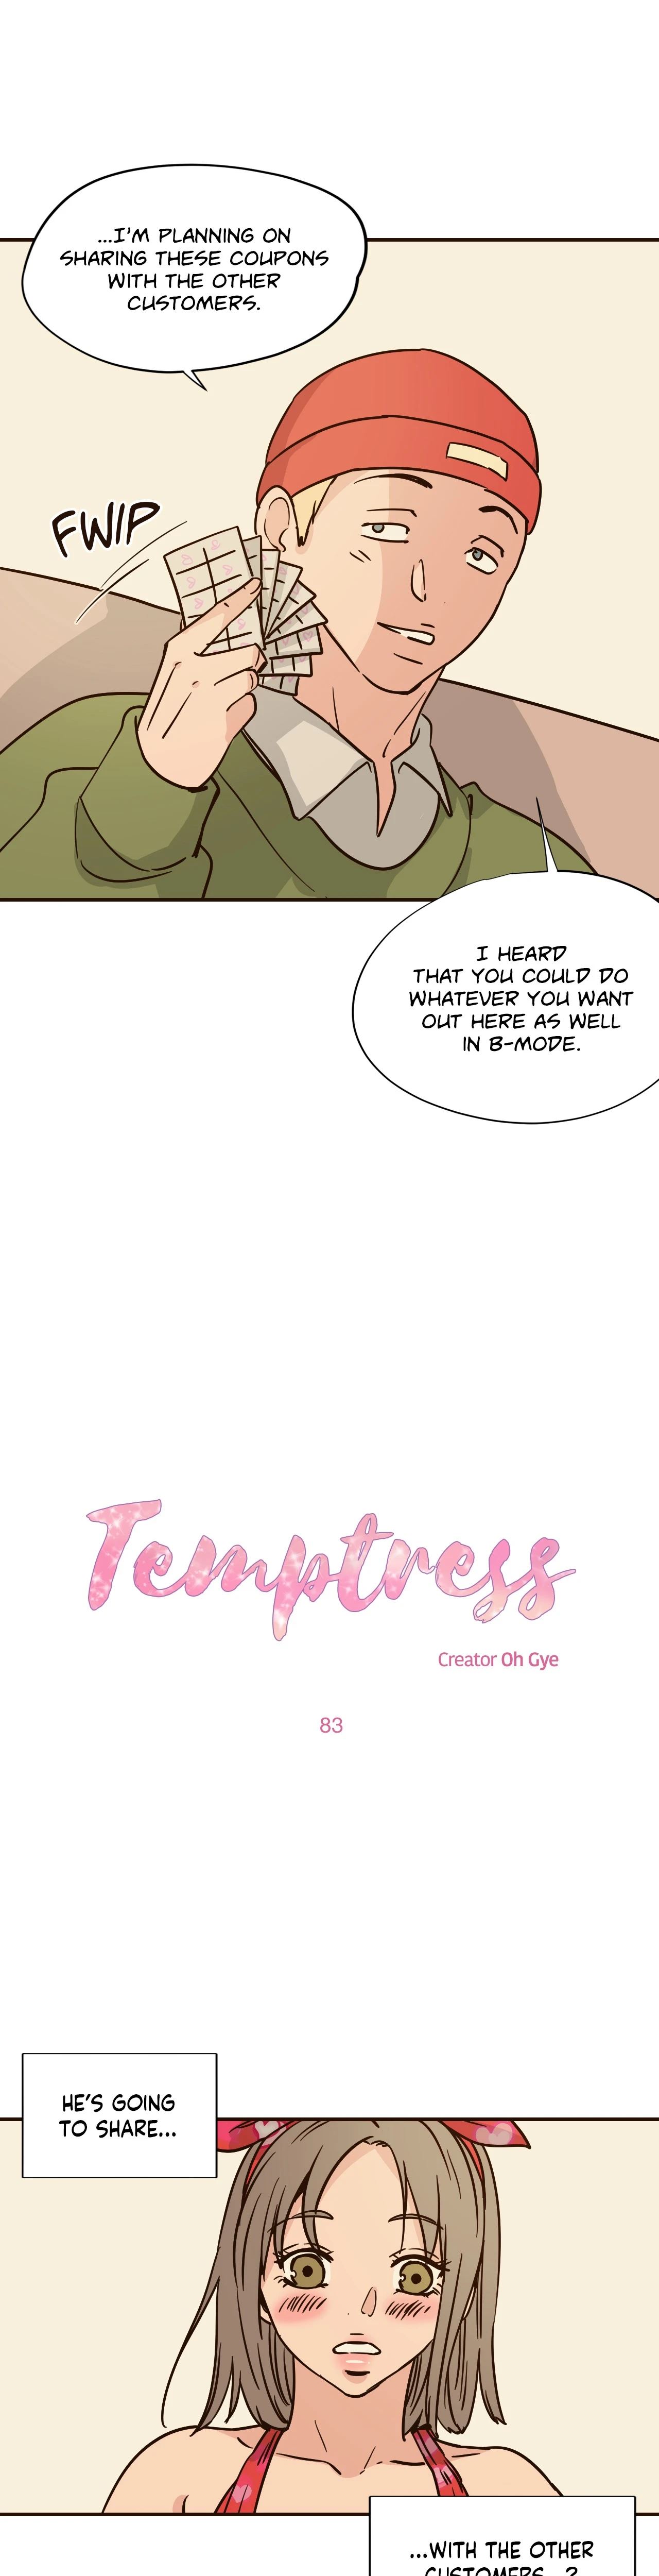 Temptress image